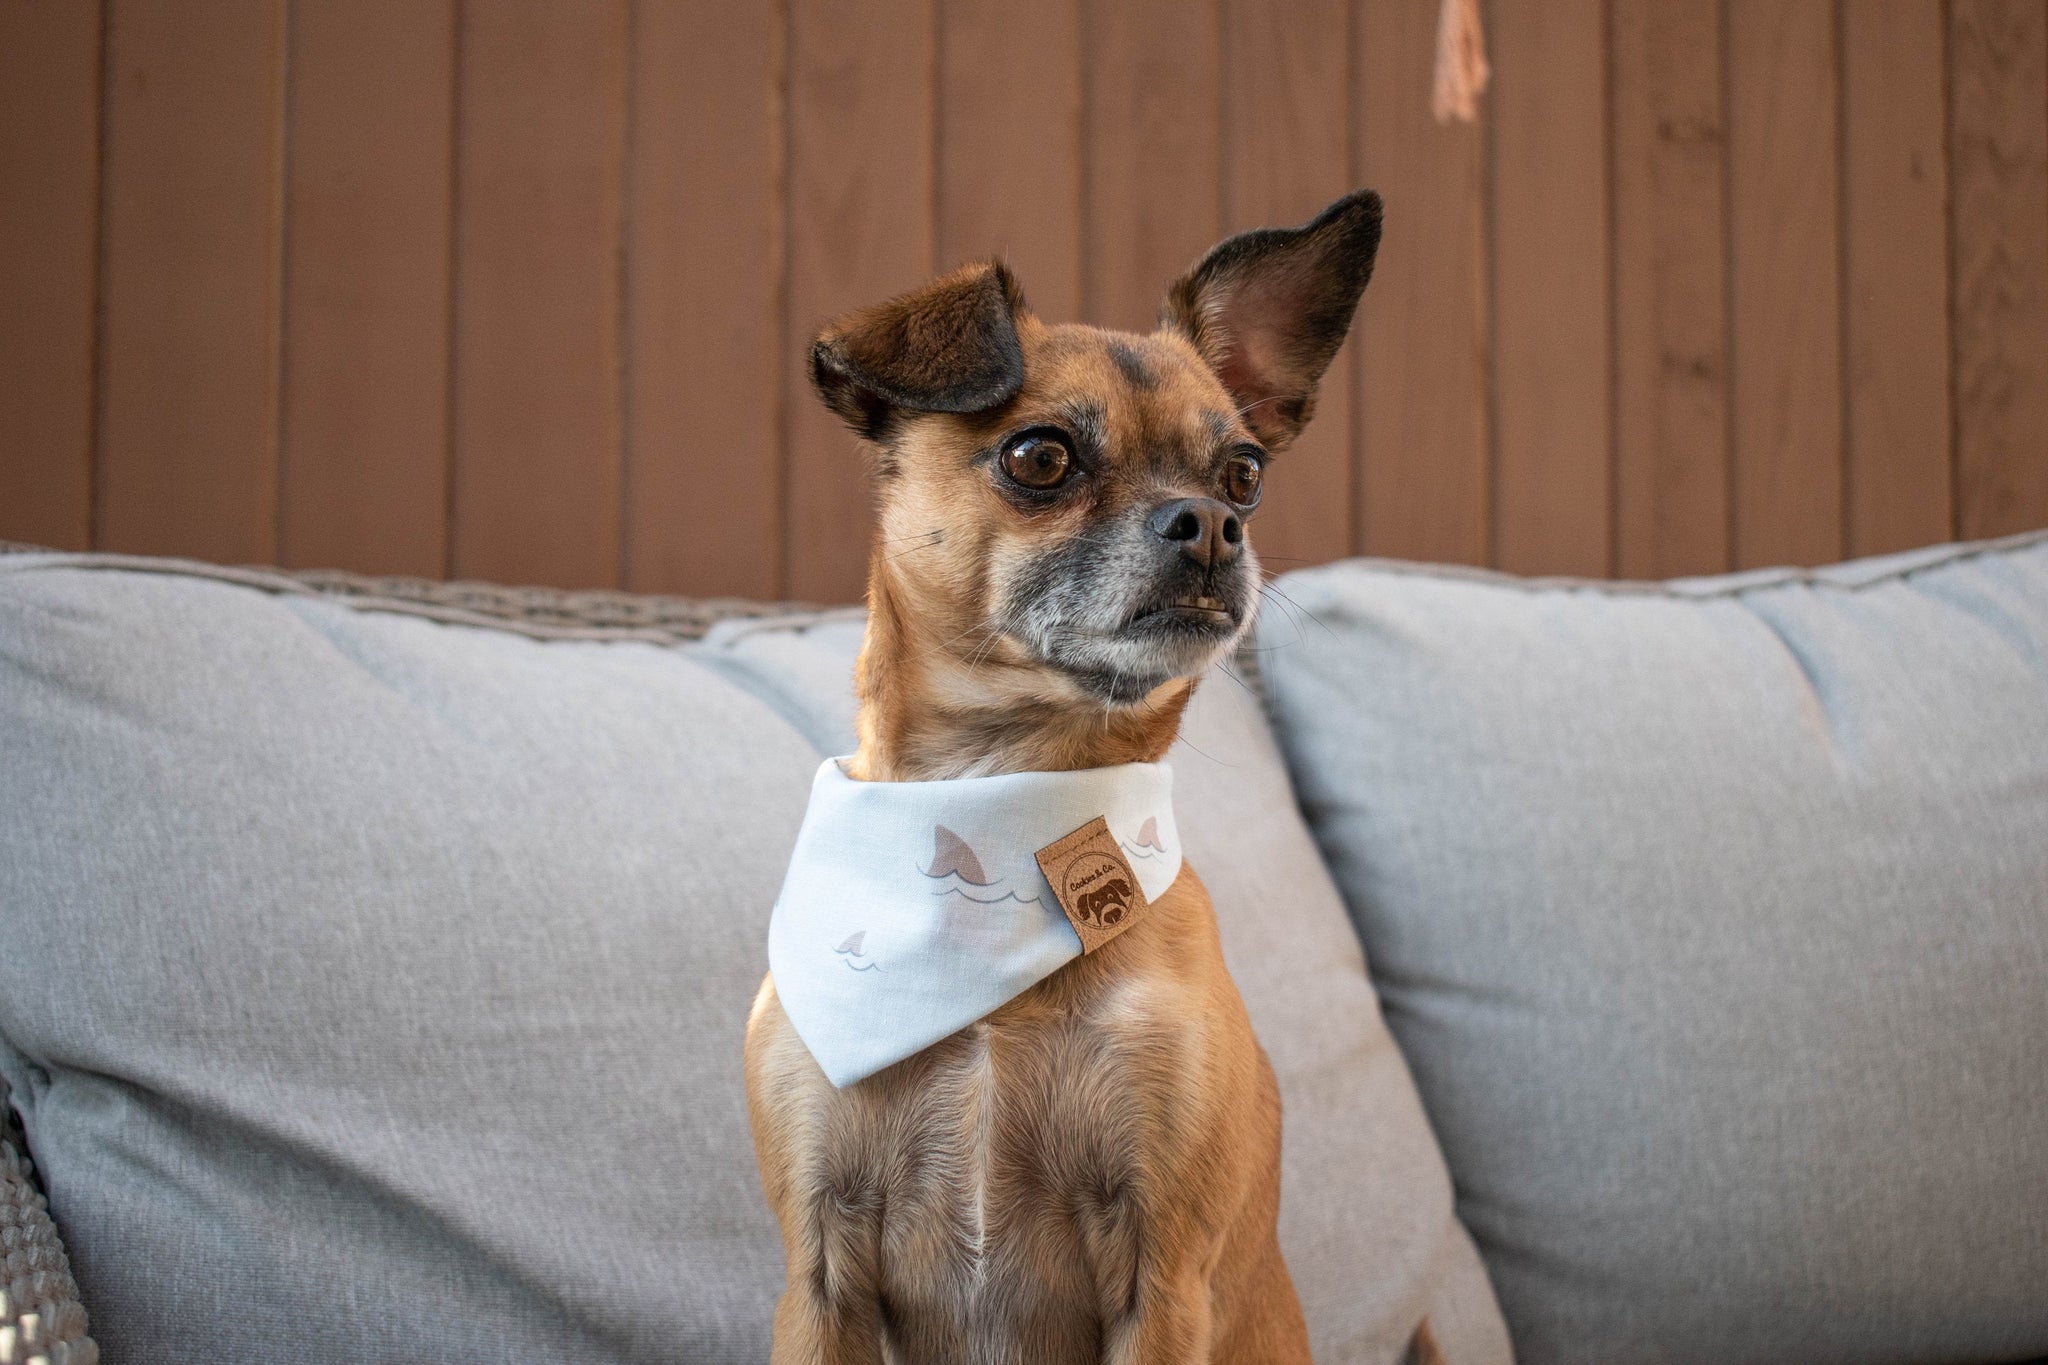 Archie, the chug, posing with the extra small Shark Week dog bandana